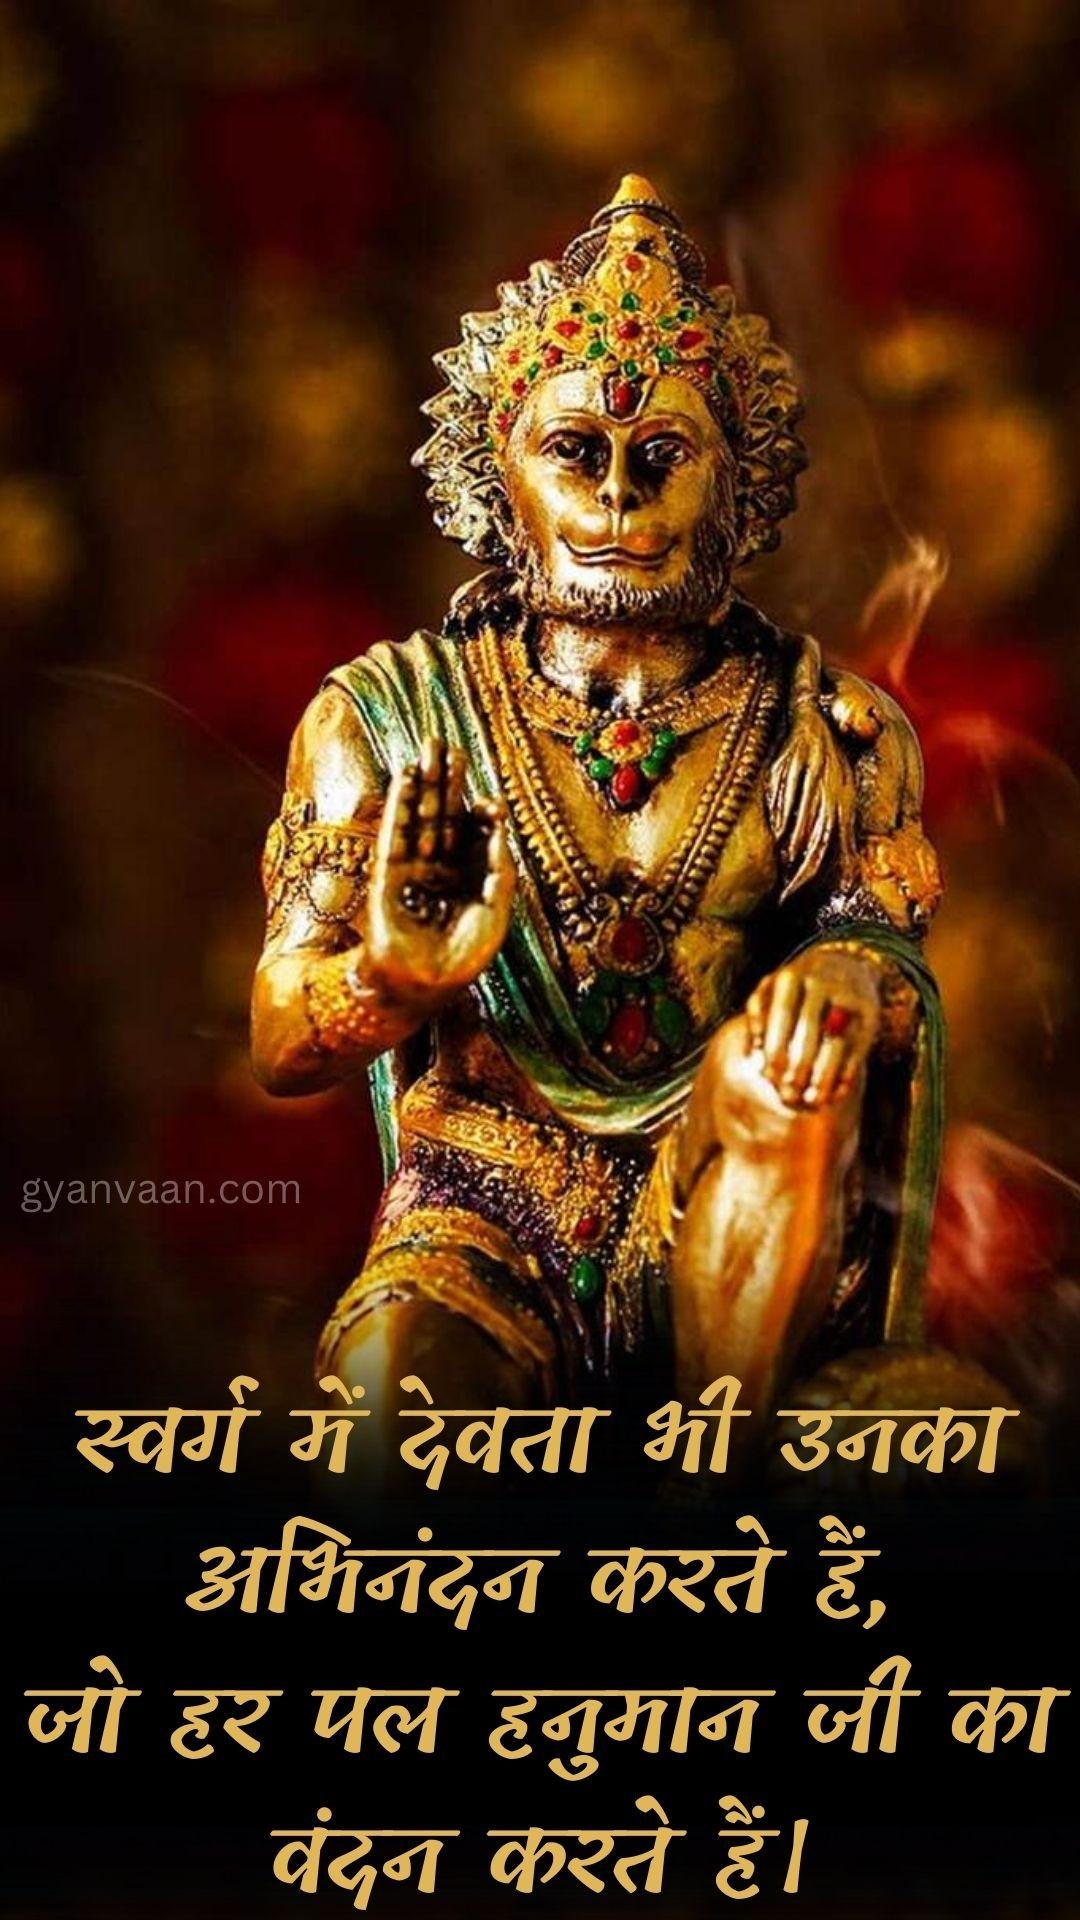 Hanuman Quotes Shayari And Whatsapp Status For Mobile With Hanuman Images And Photos 40 - Hanuman Images